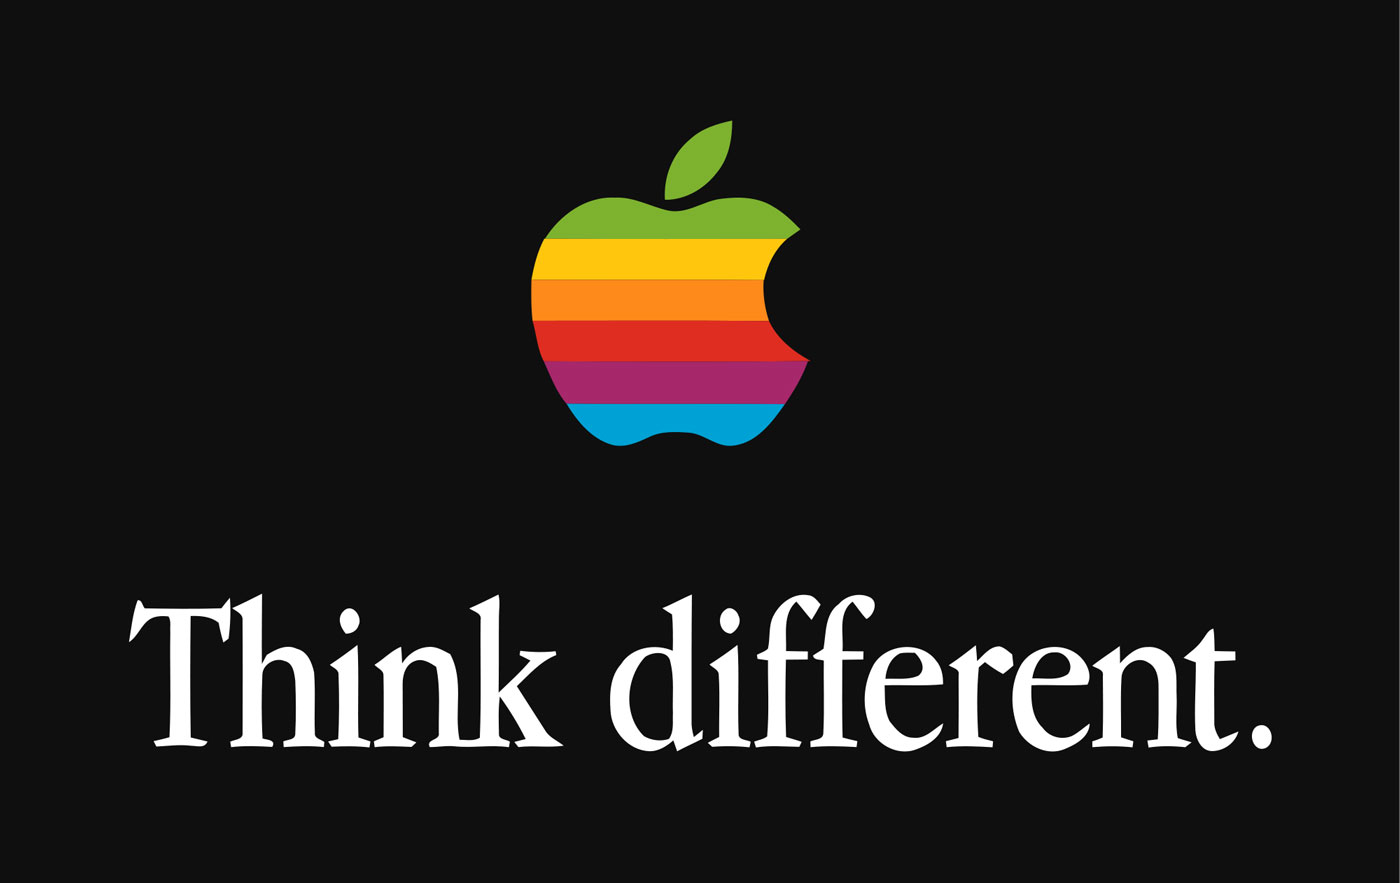 Apple’s ‘Think Different’ slogan